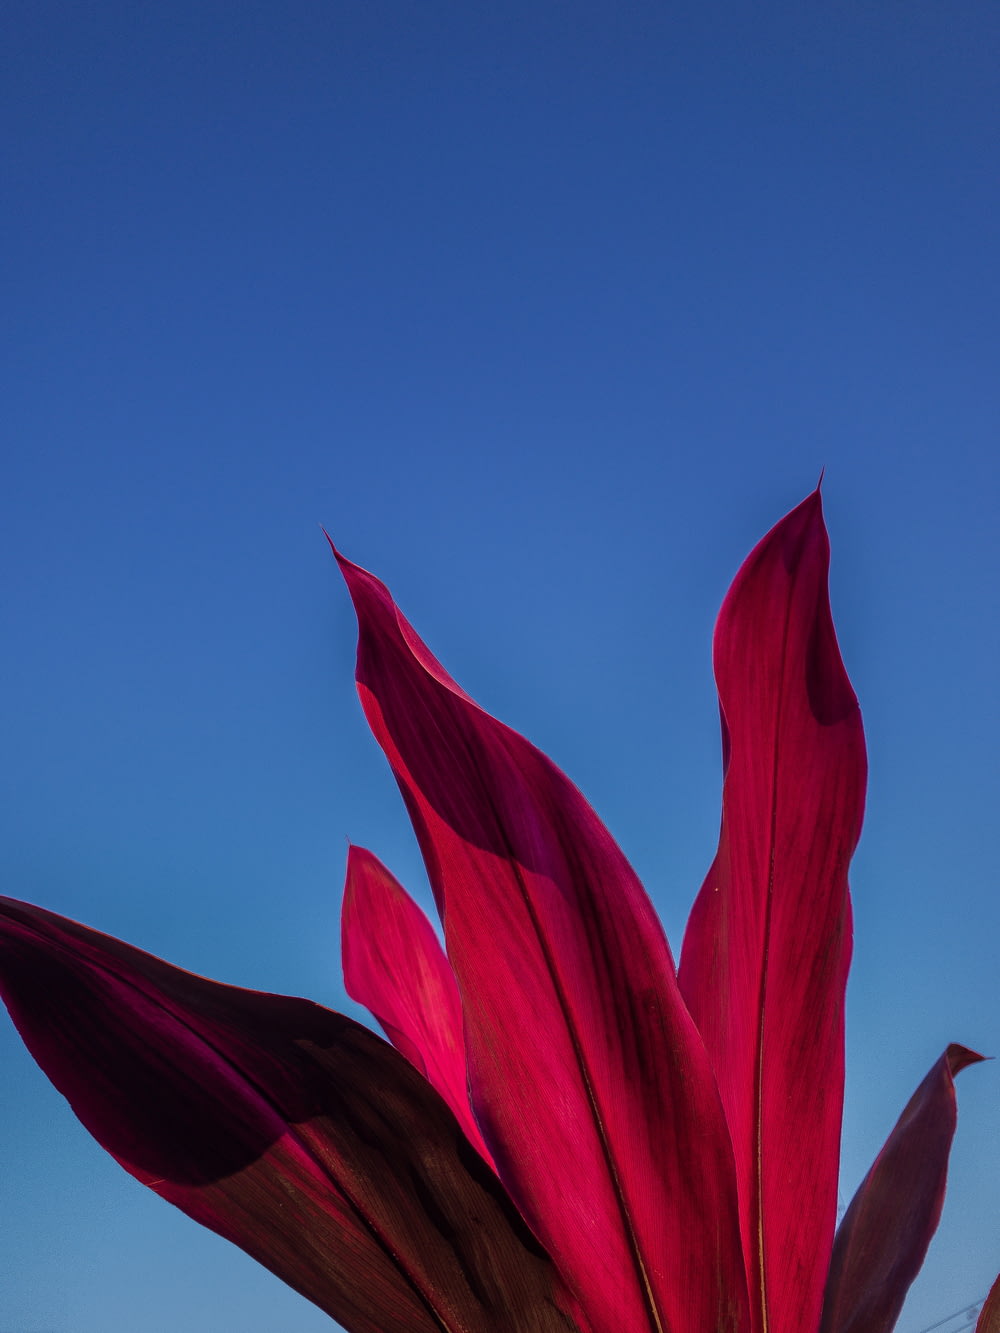 red flower under blue sky